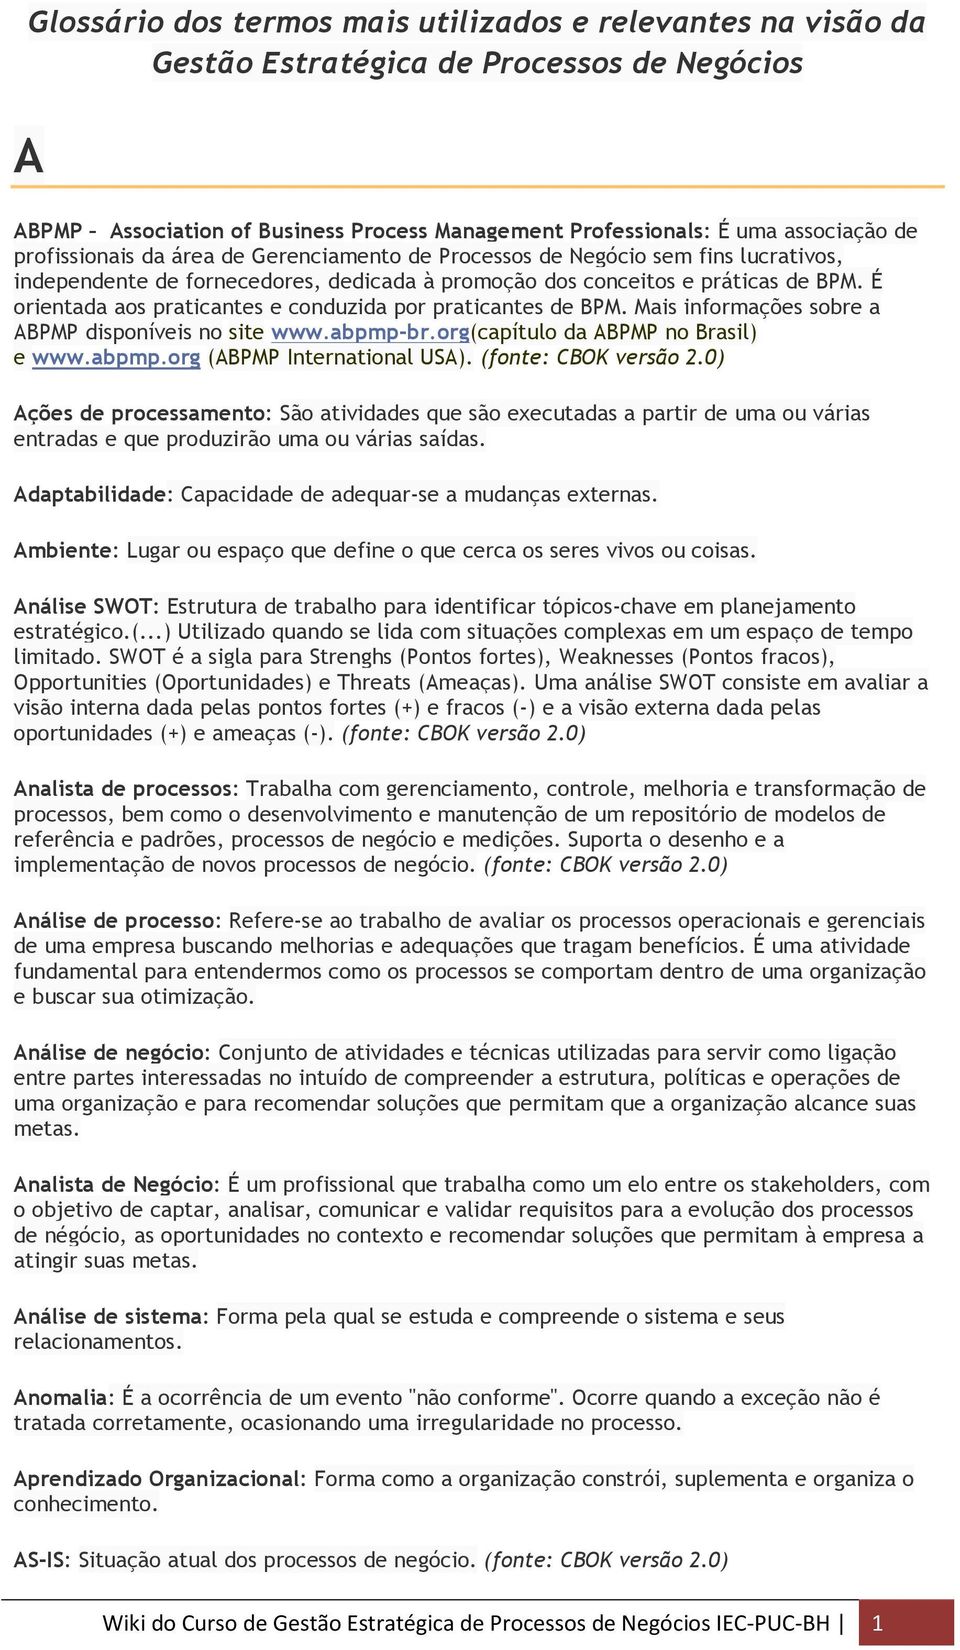 org(capítulo da ABPMP no Brasil) e www.abpmp.org (ABPMP International USA). (fonte: CBOK versão 2.